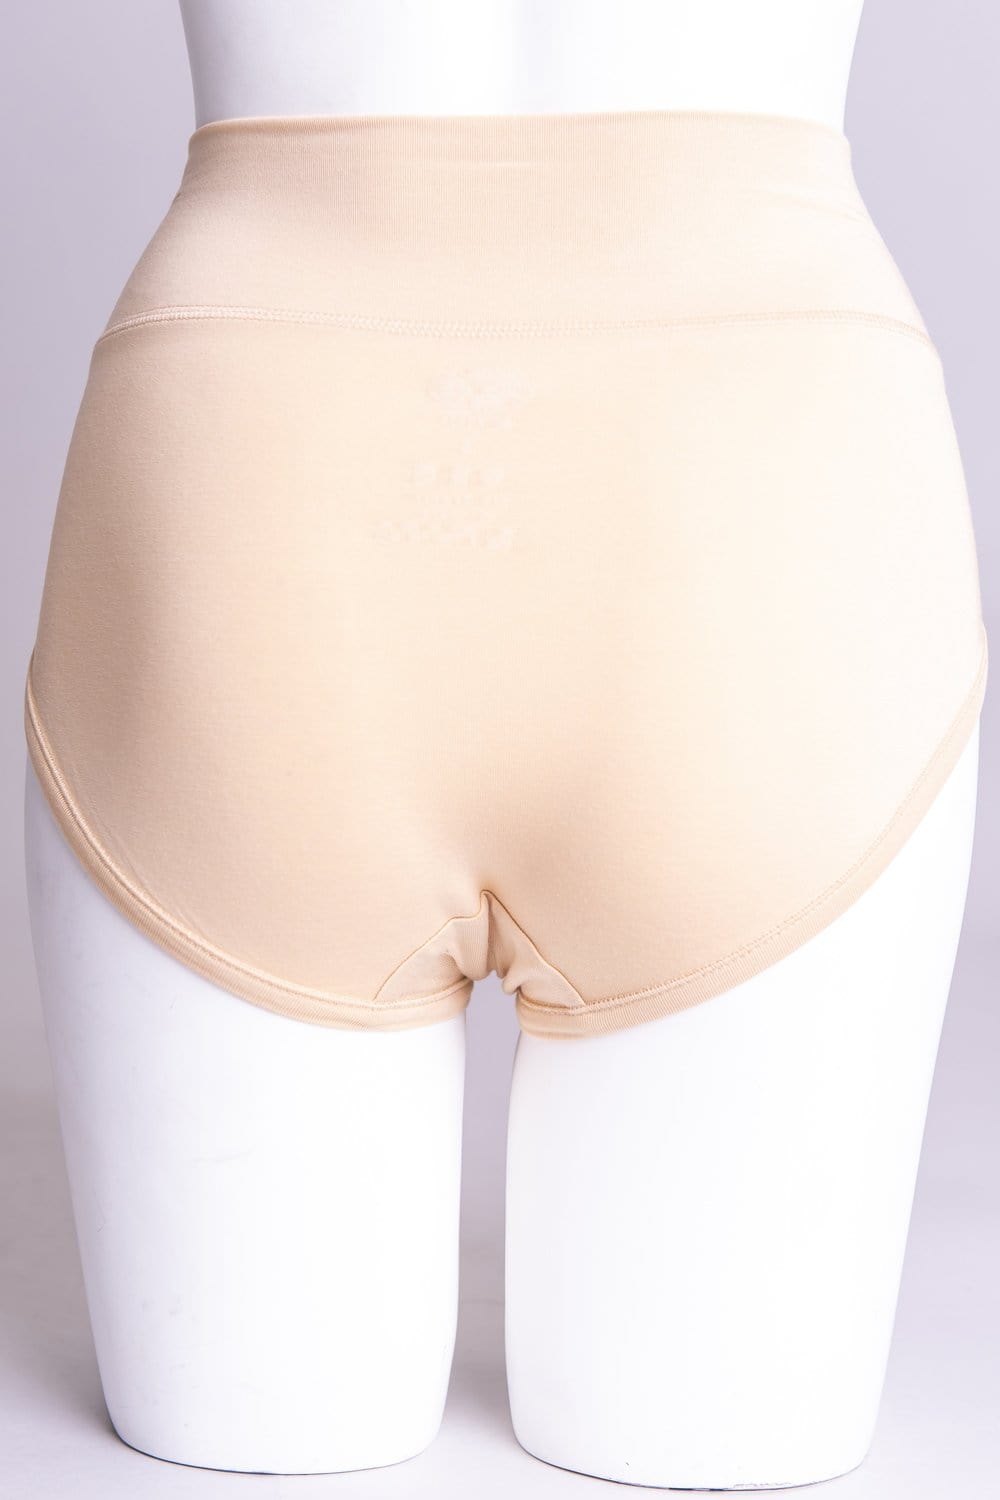 Blue Sky Women's Underwear Beige / S Women's Briefs - La Gaunche